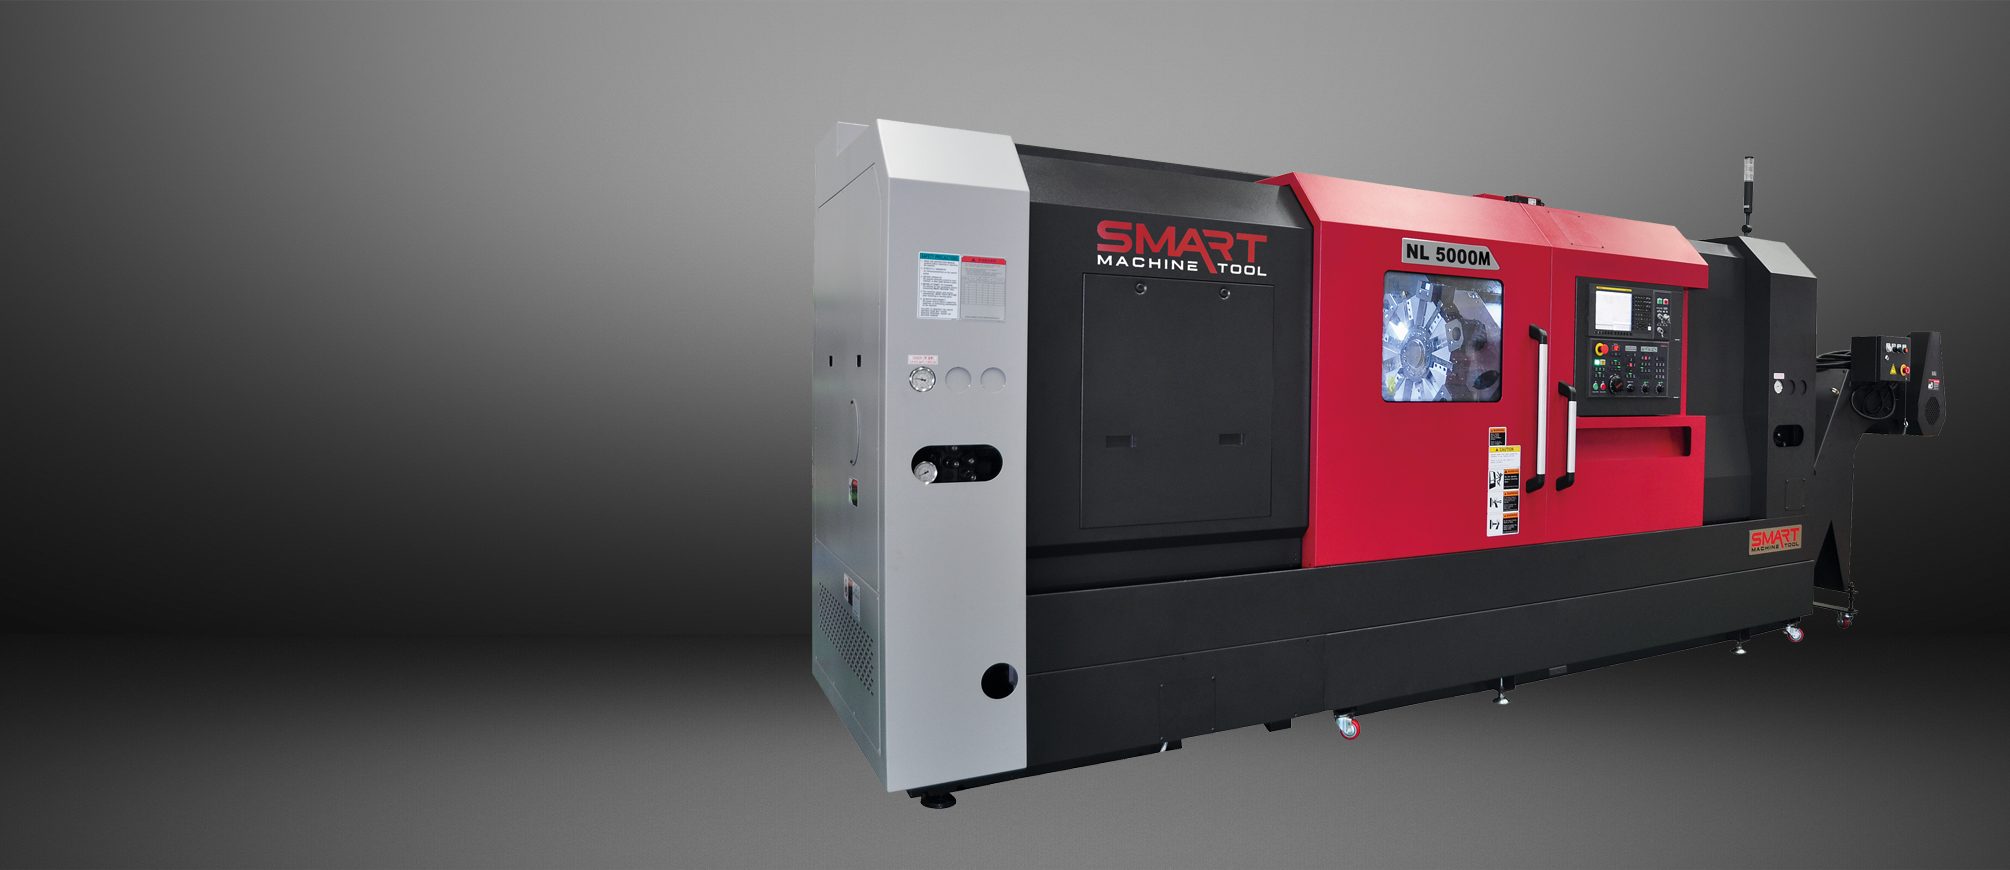 SMART NL 5000M – BOX WAY – (21″ CHUCK) 3-Axis CNC Lathes